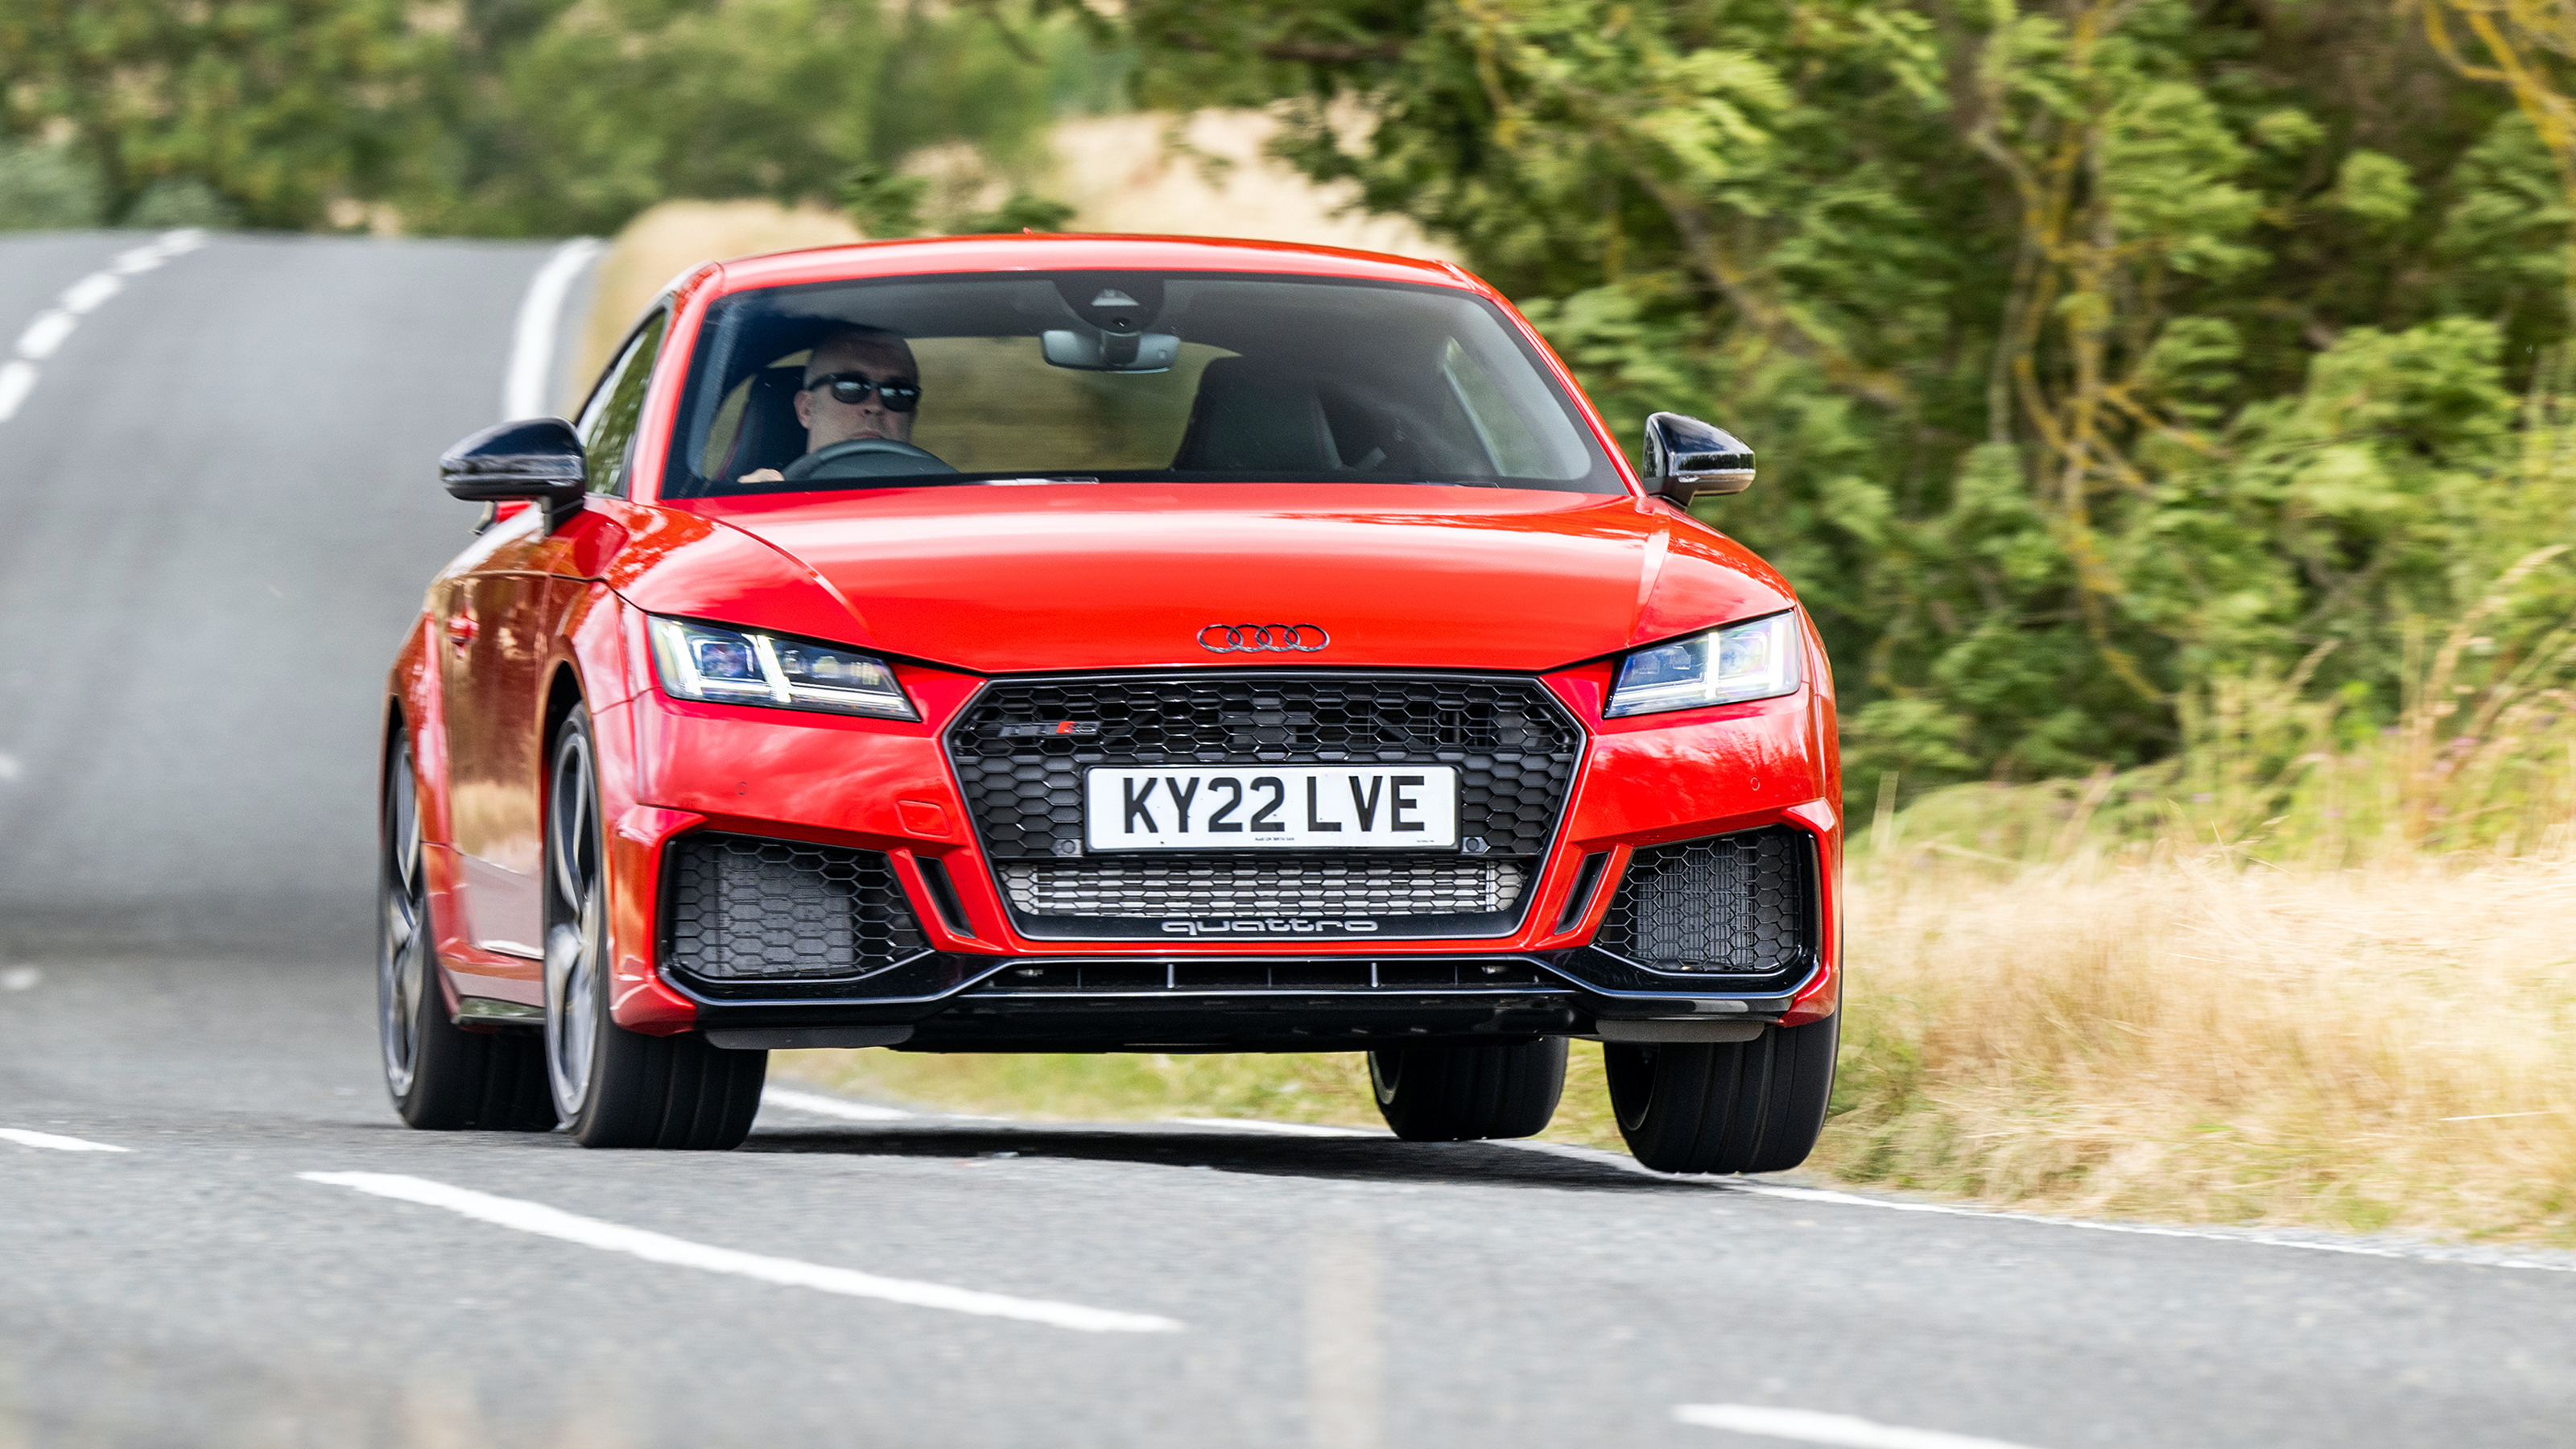 Audi TT Final Edition revealed for the UK market